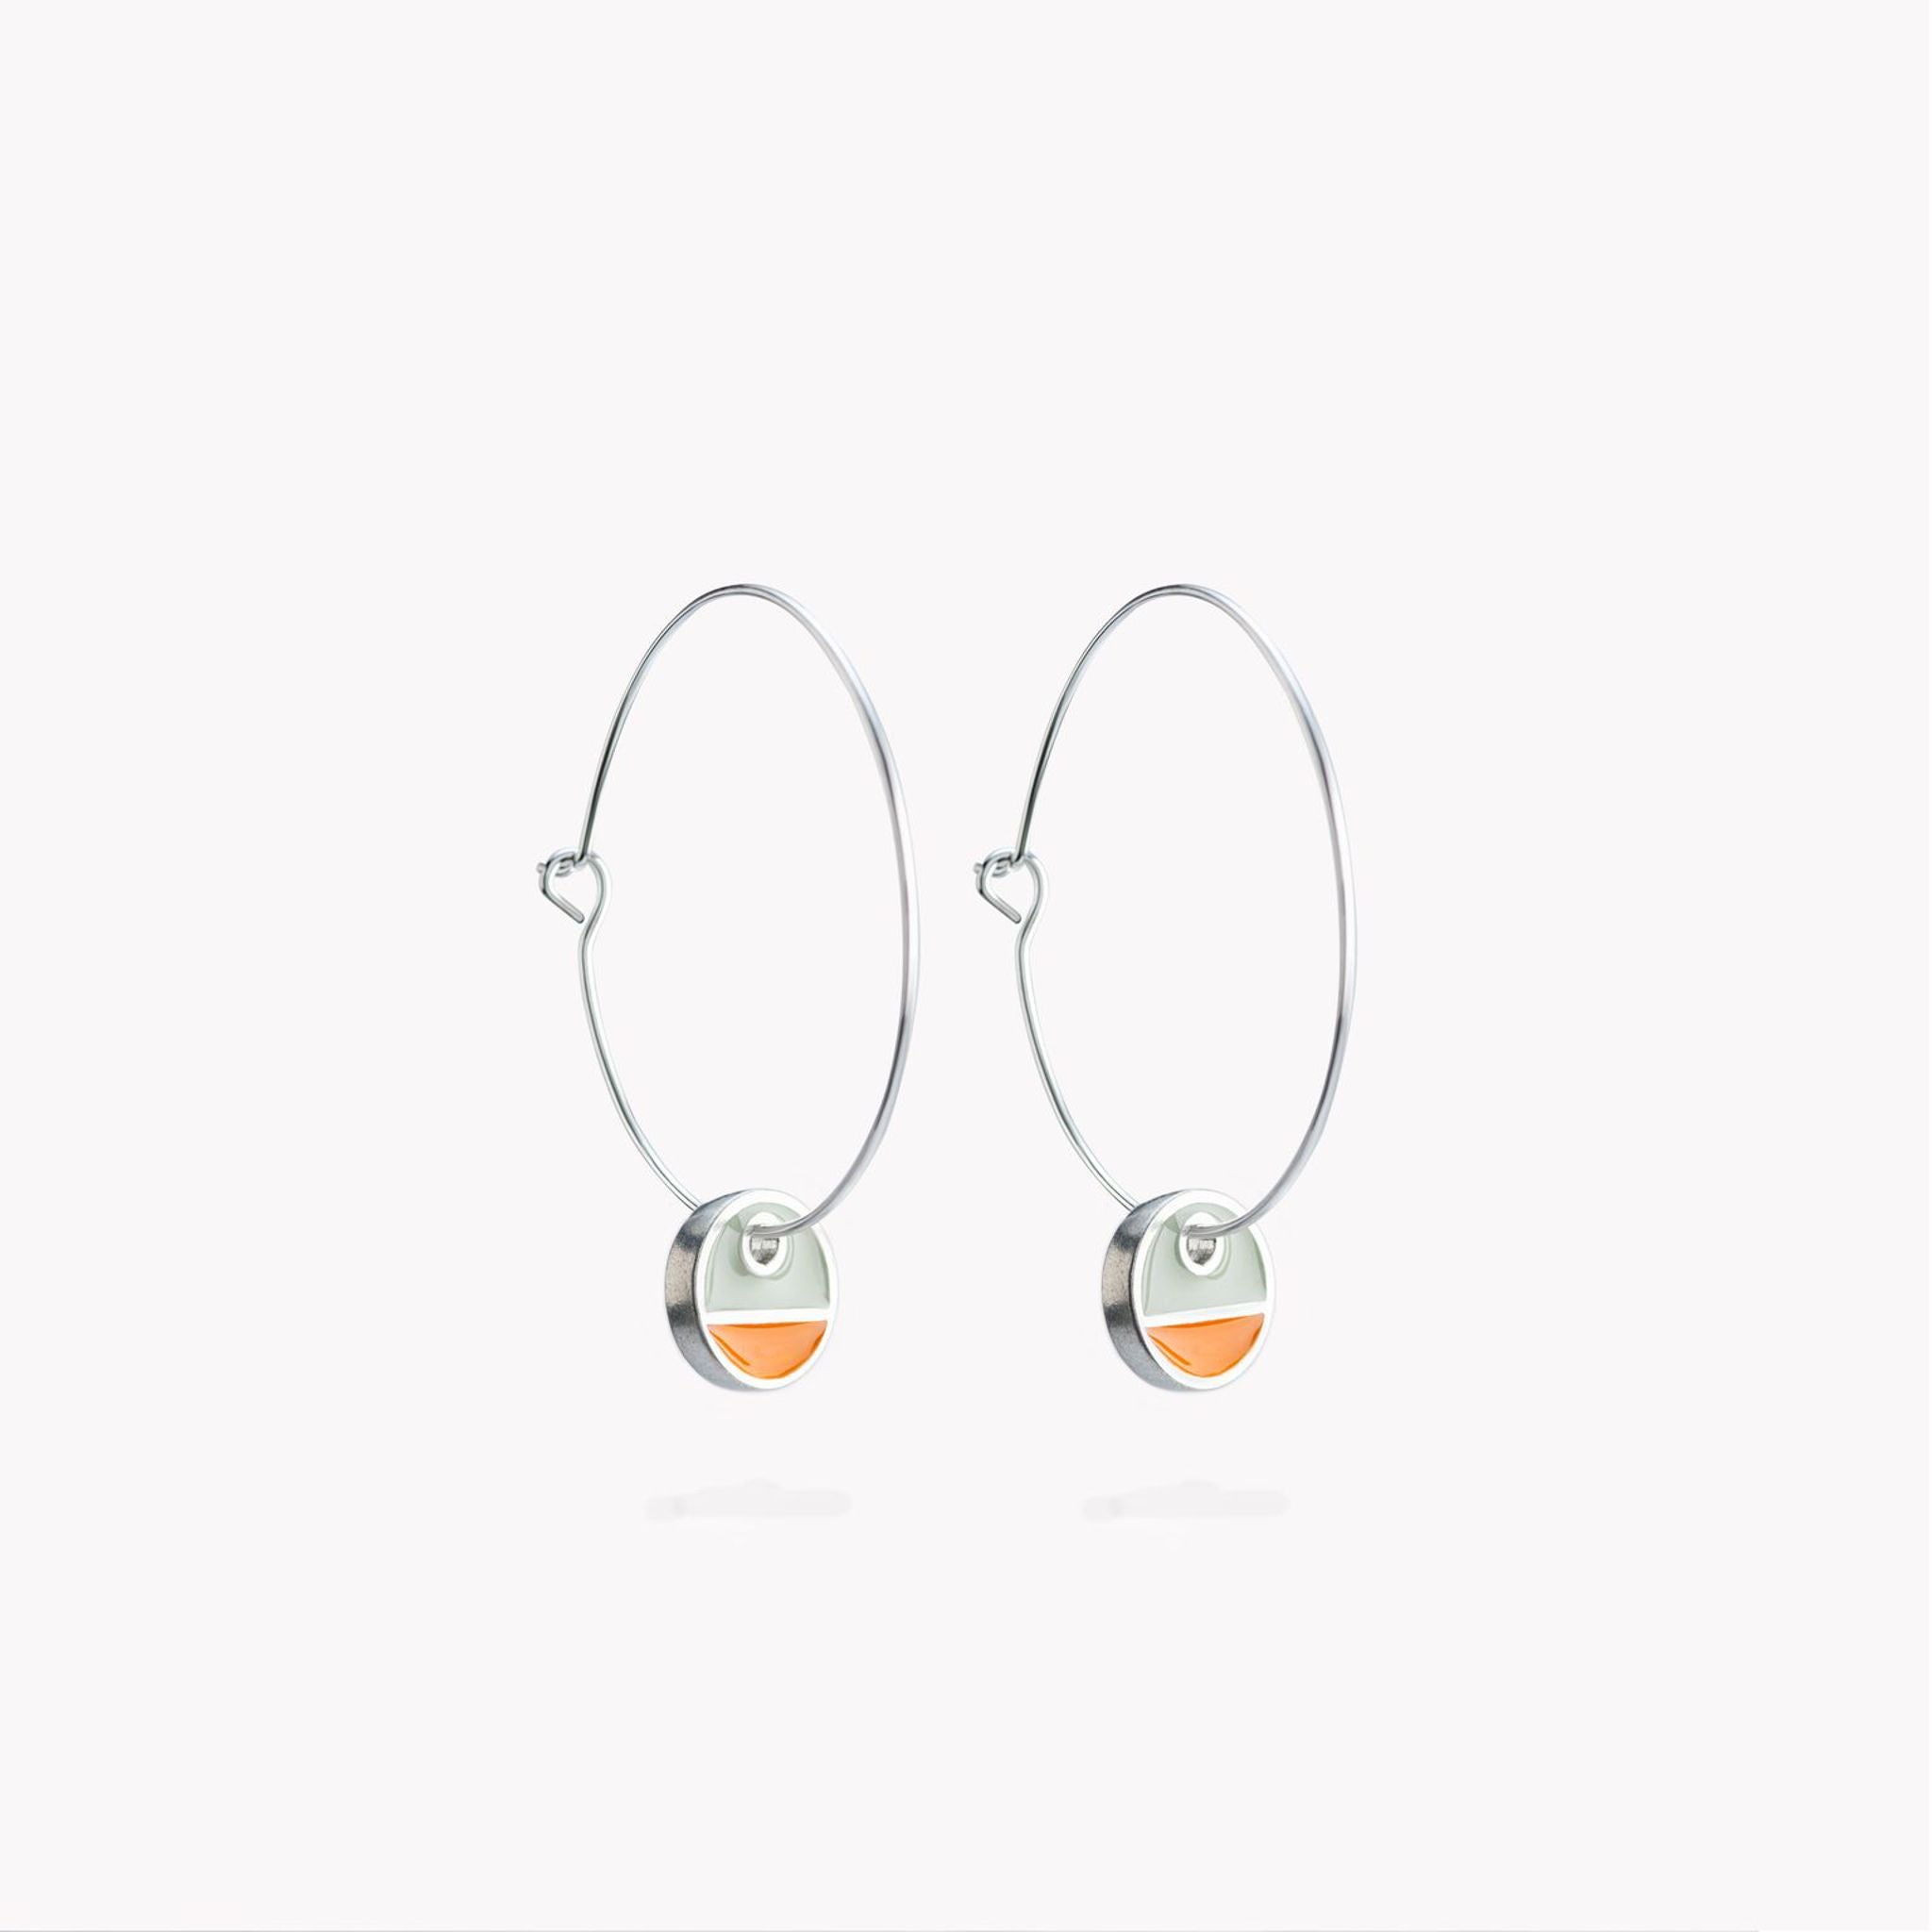 A simple pair of hoop earrings with orange and grey circular hanging discs.